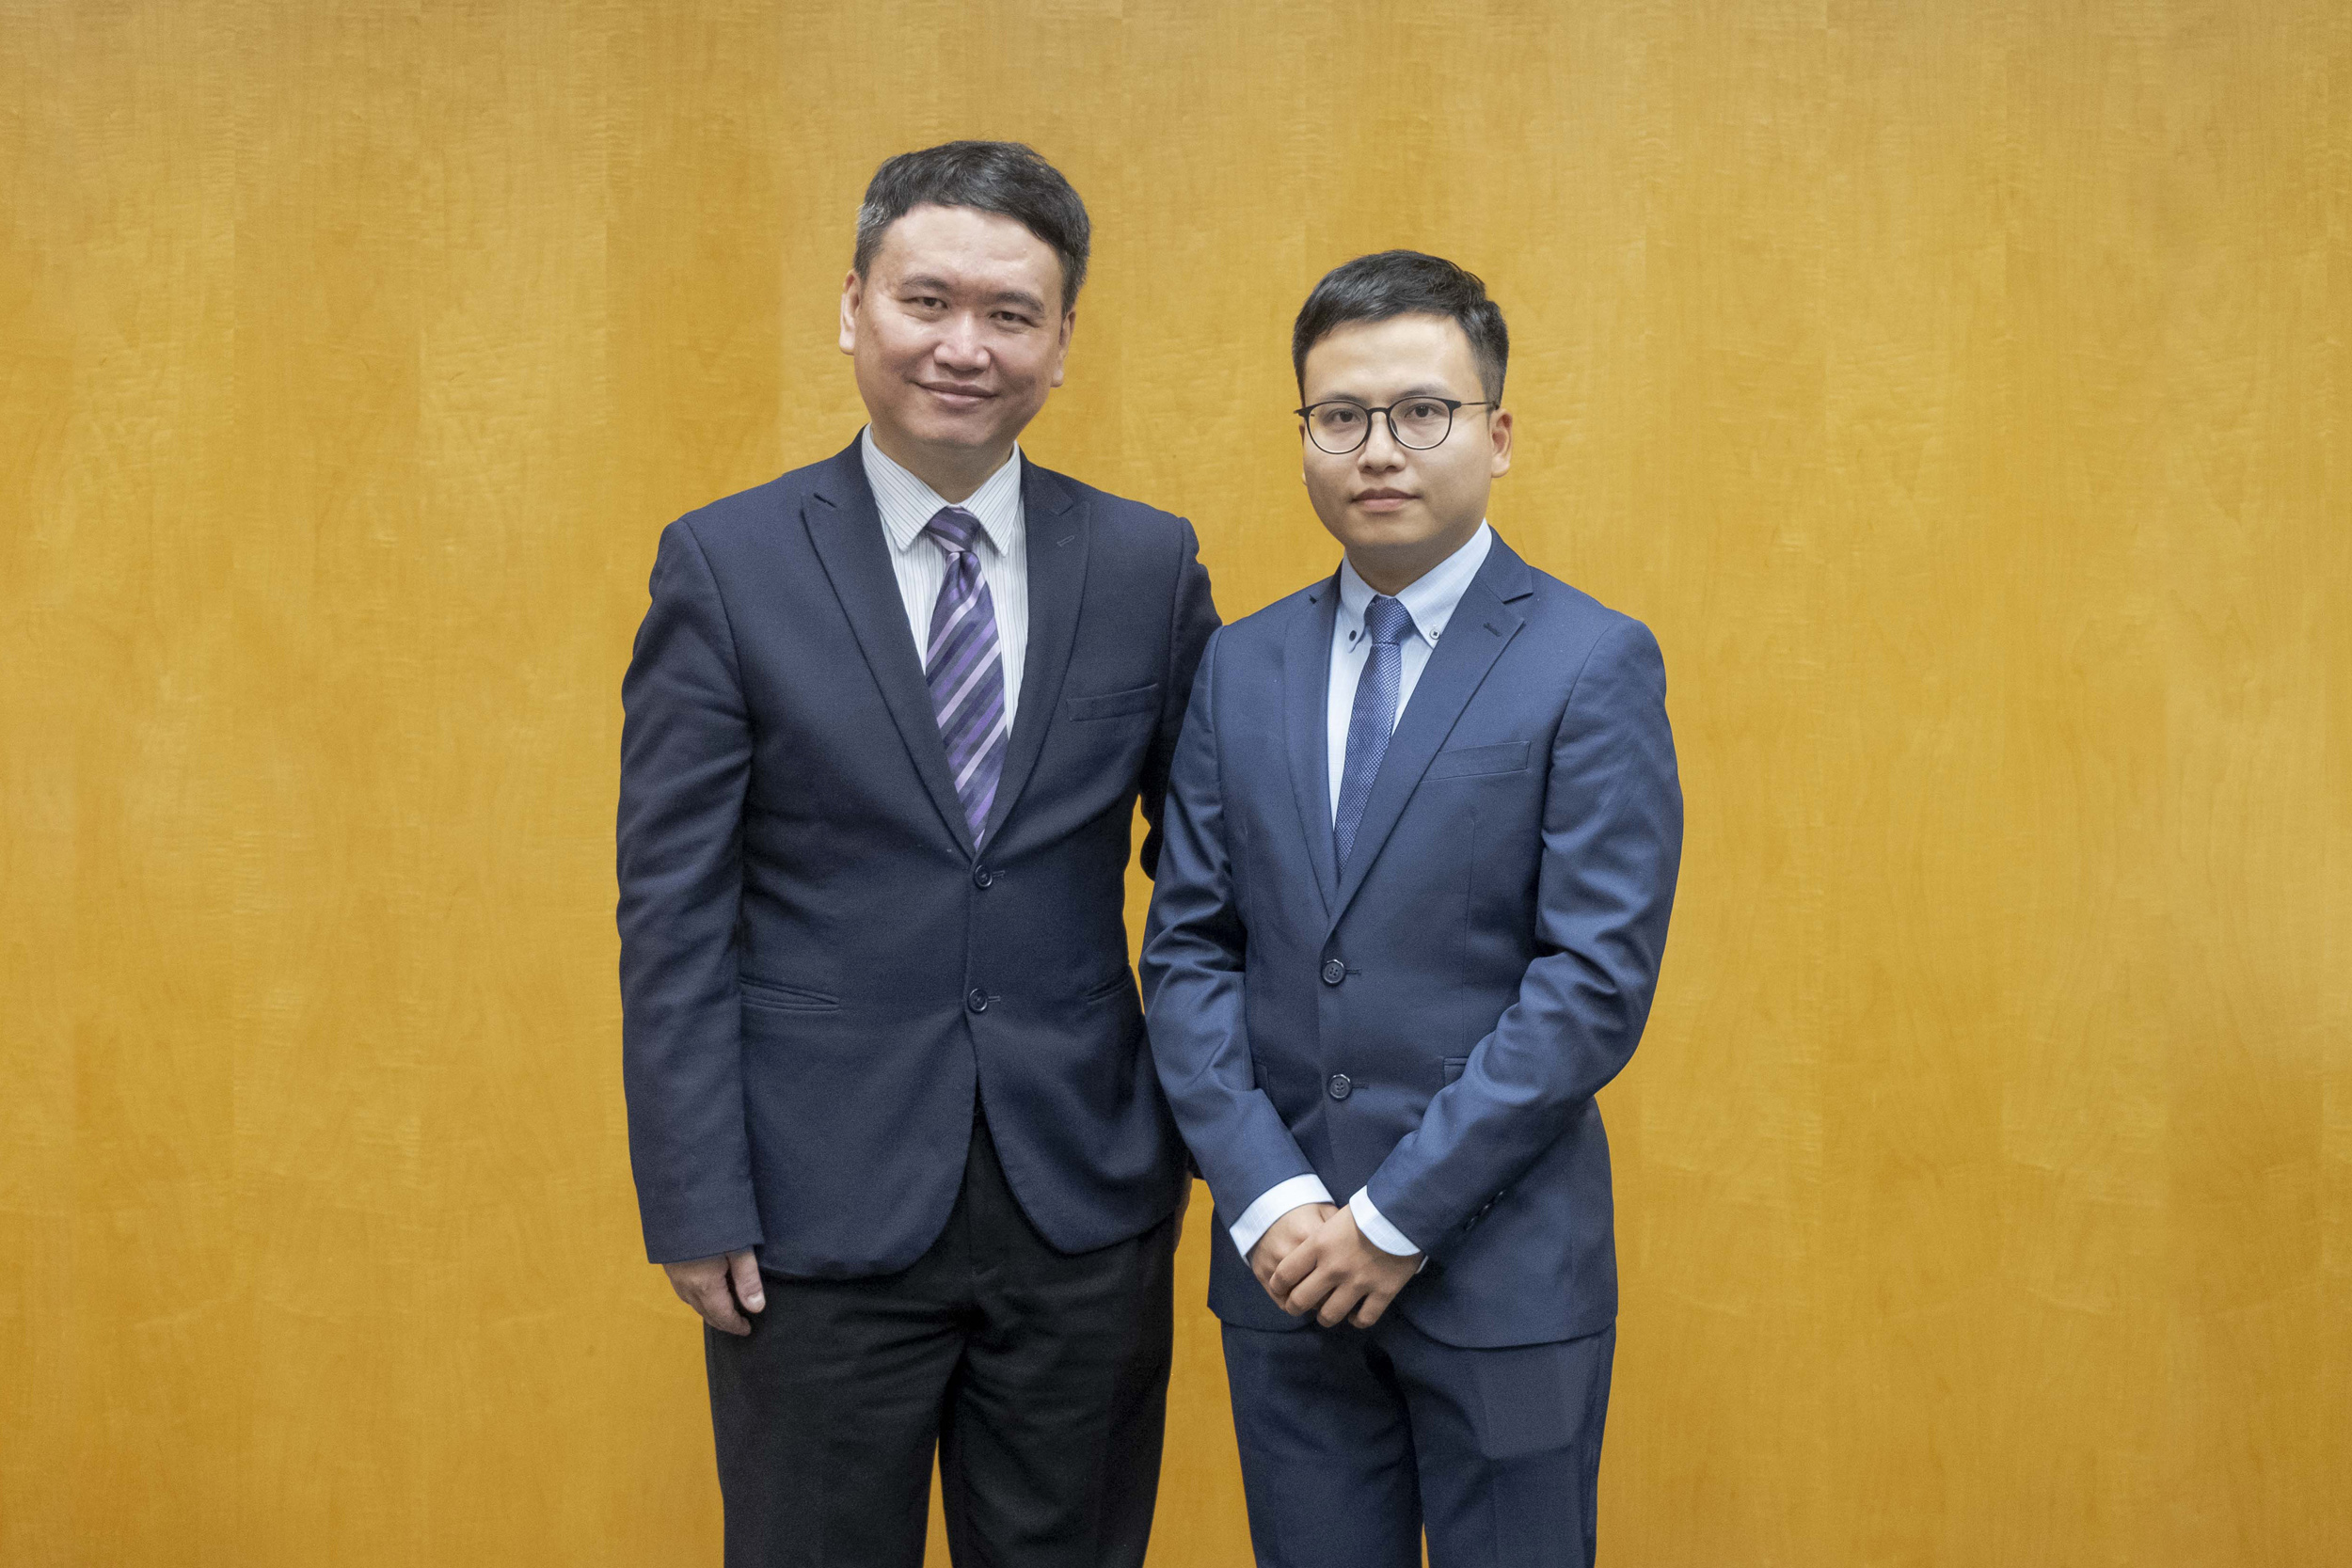 Professor Martin Wong and Dr Jason Huang